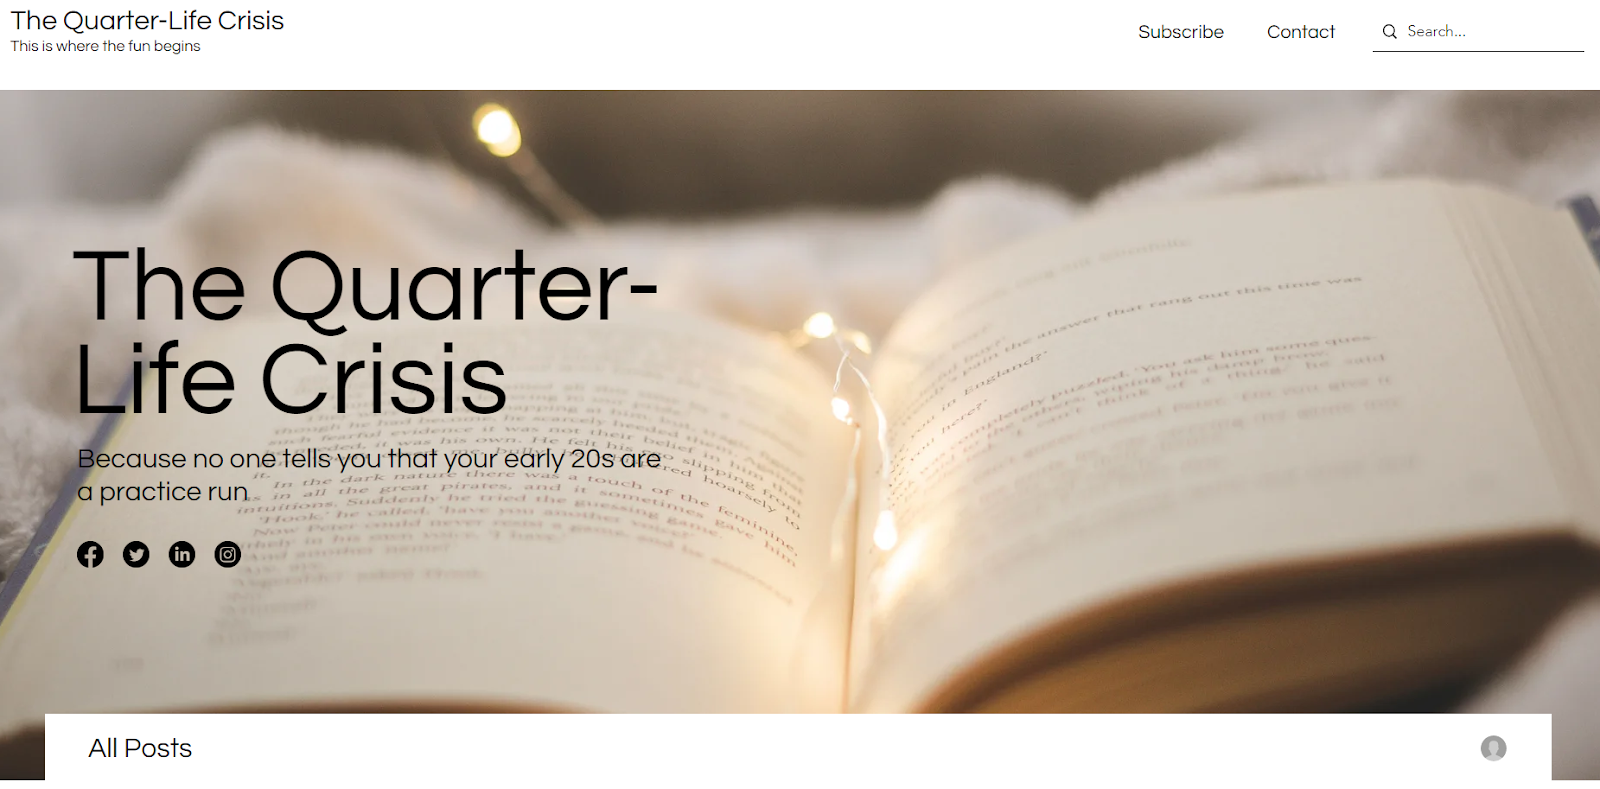 A screenshot of a blog called "The Quarter-Life Crisis" built using Wix